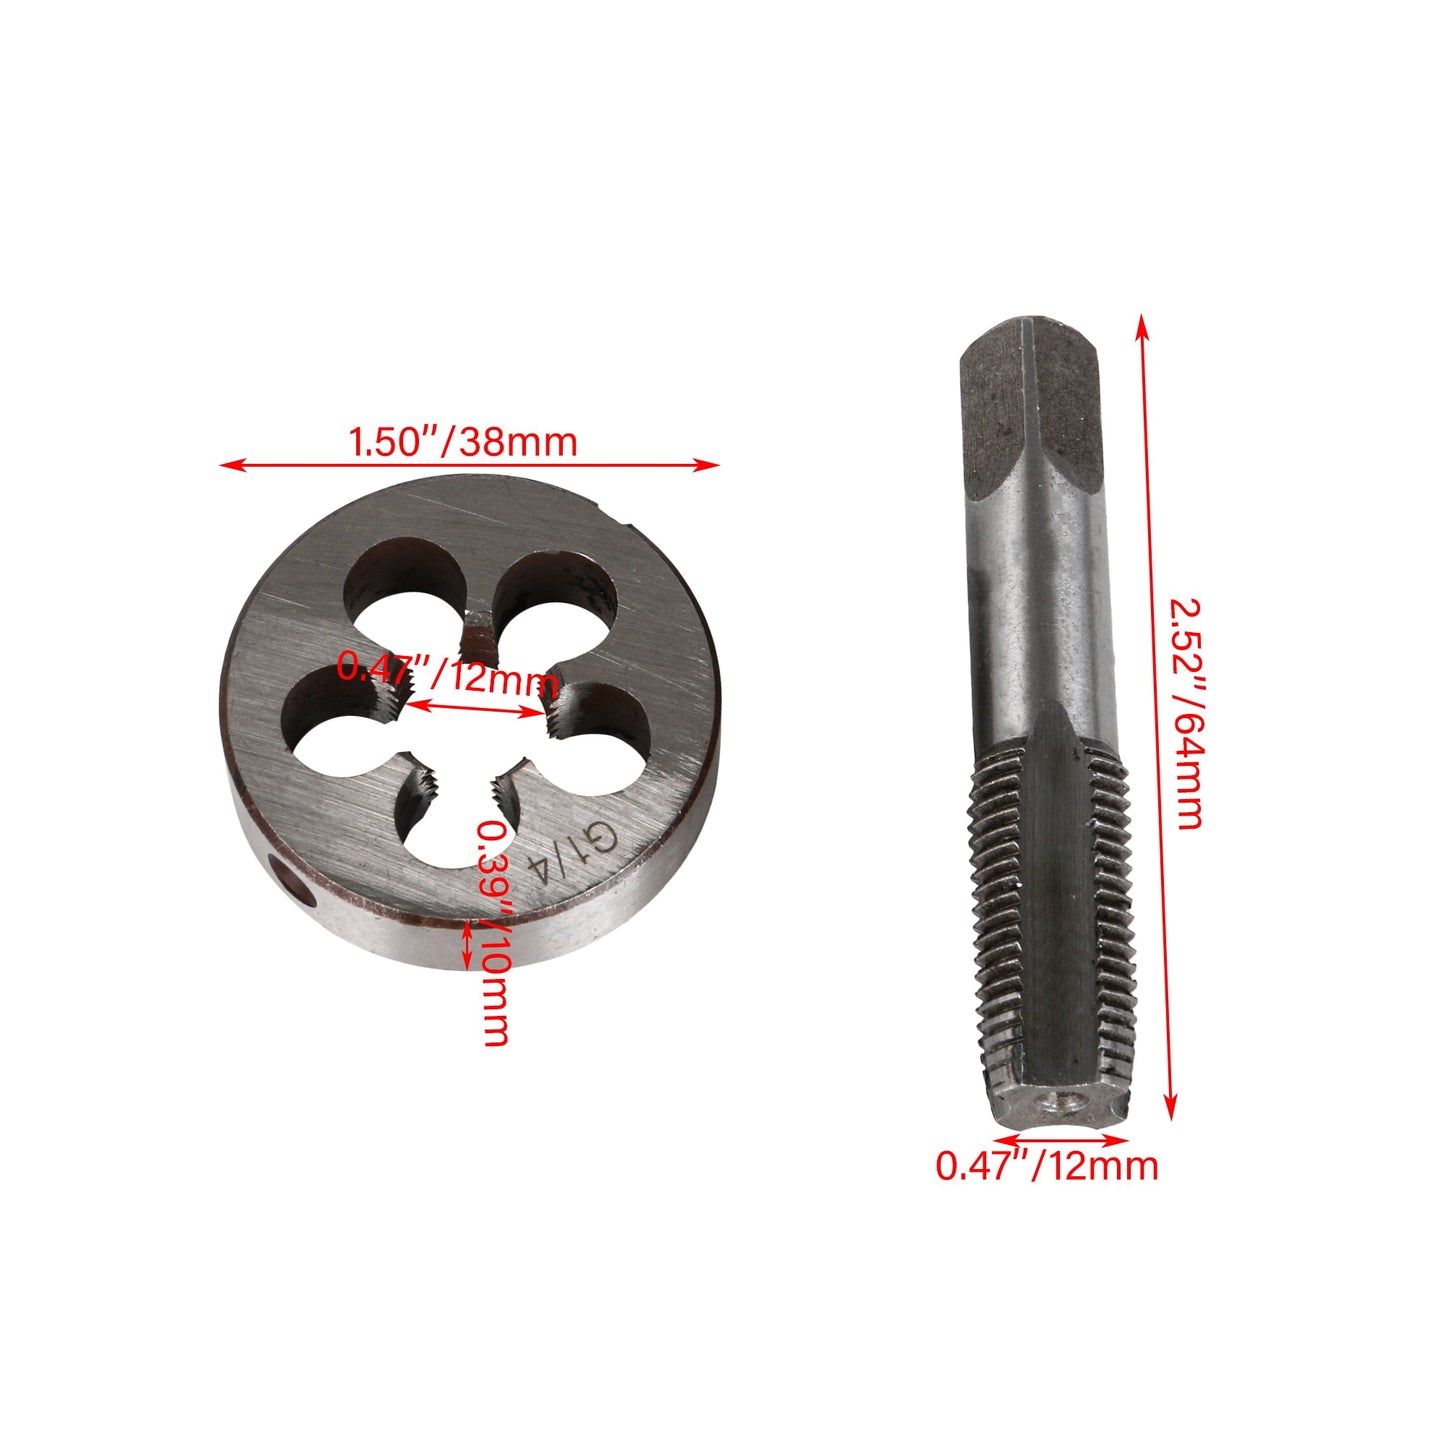 BQLZR BSP 1/4 Threading Bearing Steel Hand Taps Industry Thread Repair Kit Silver